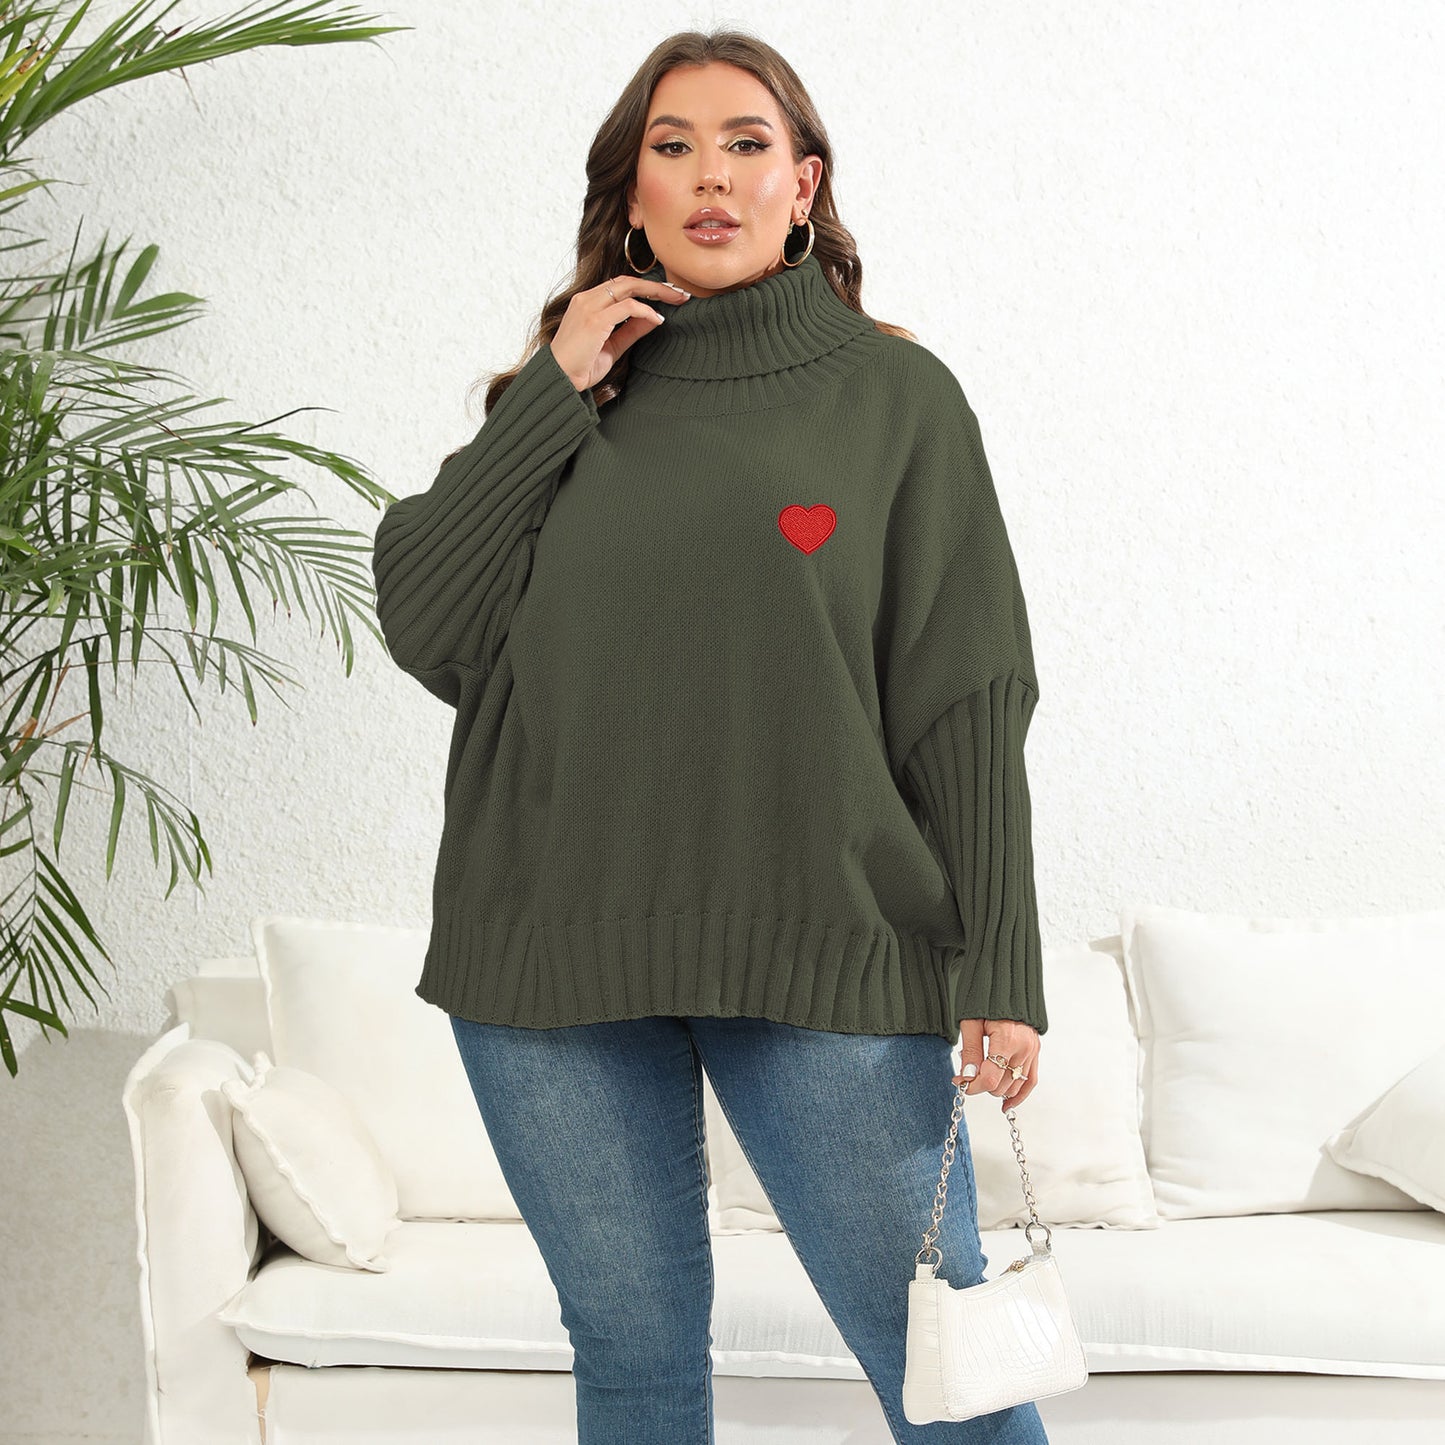 BamBam Heart Print Sticker Plus Size Women's Solid Turtleneck Woven Sweater Oversized Pullover Women's Top - BamBam